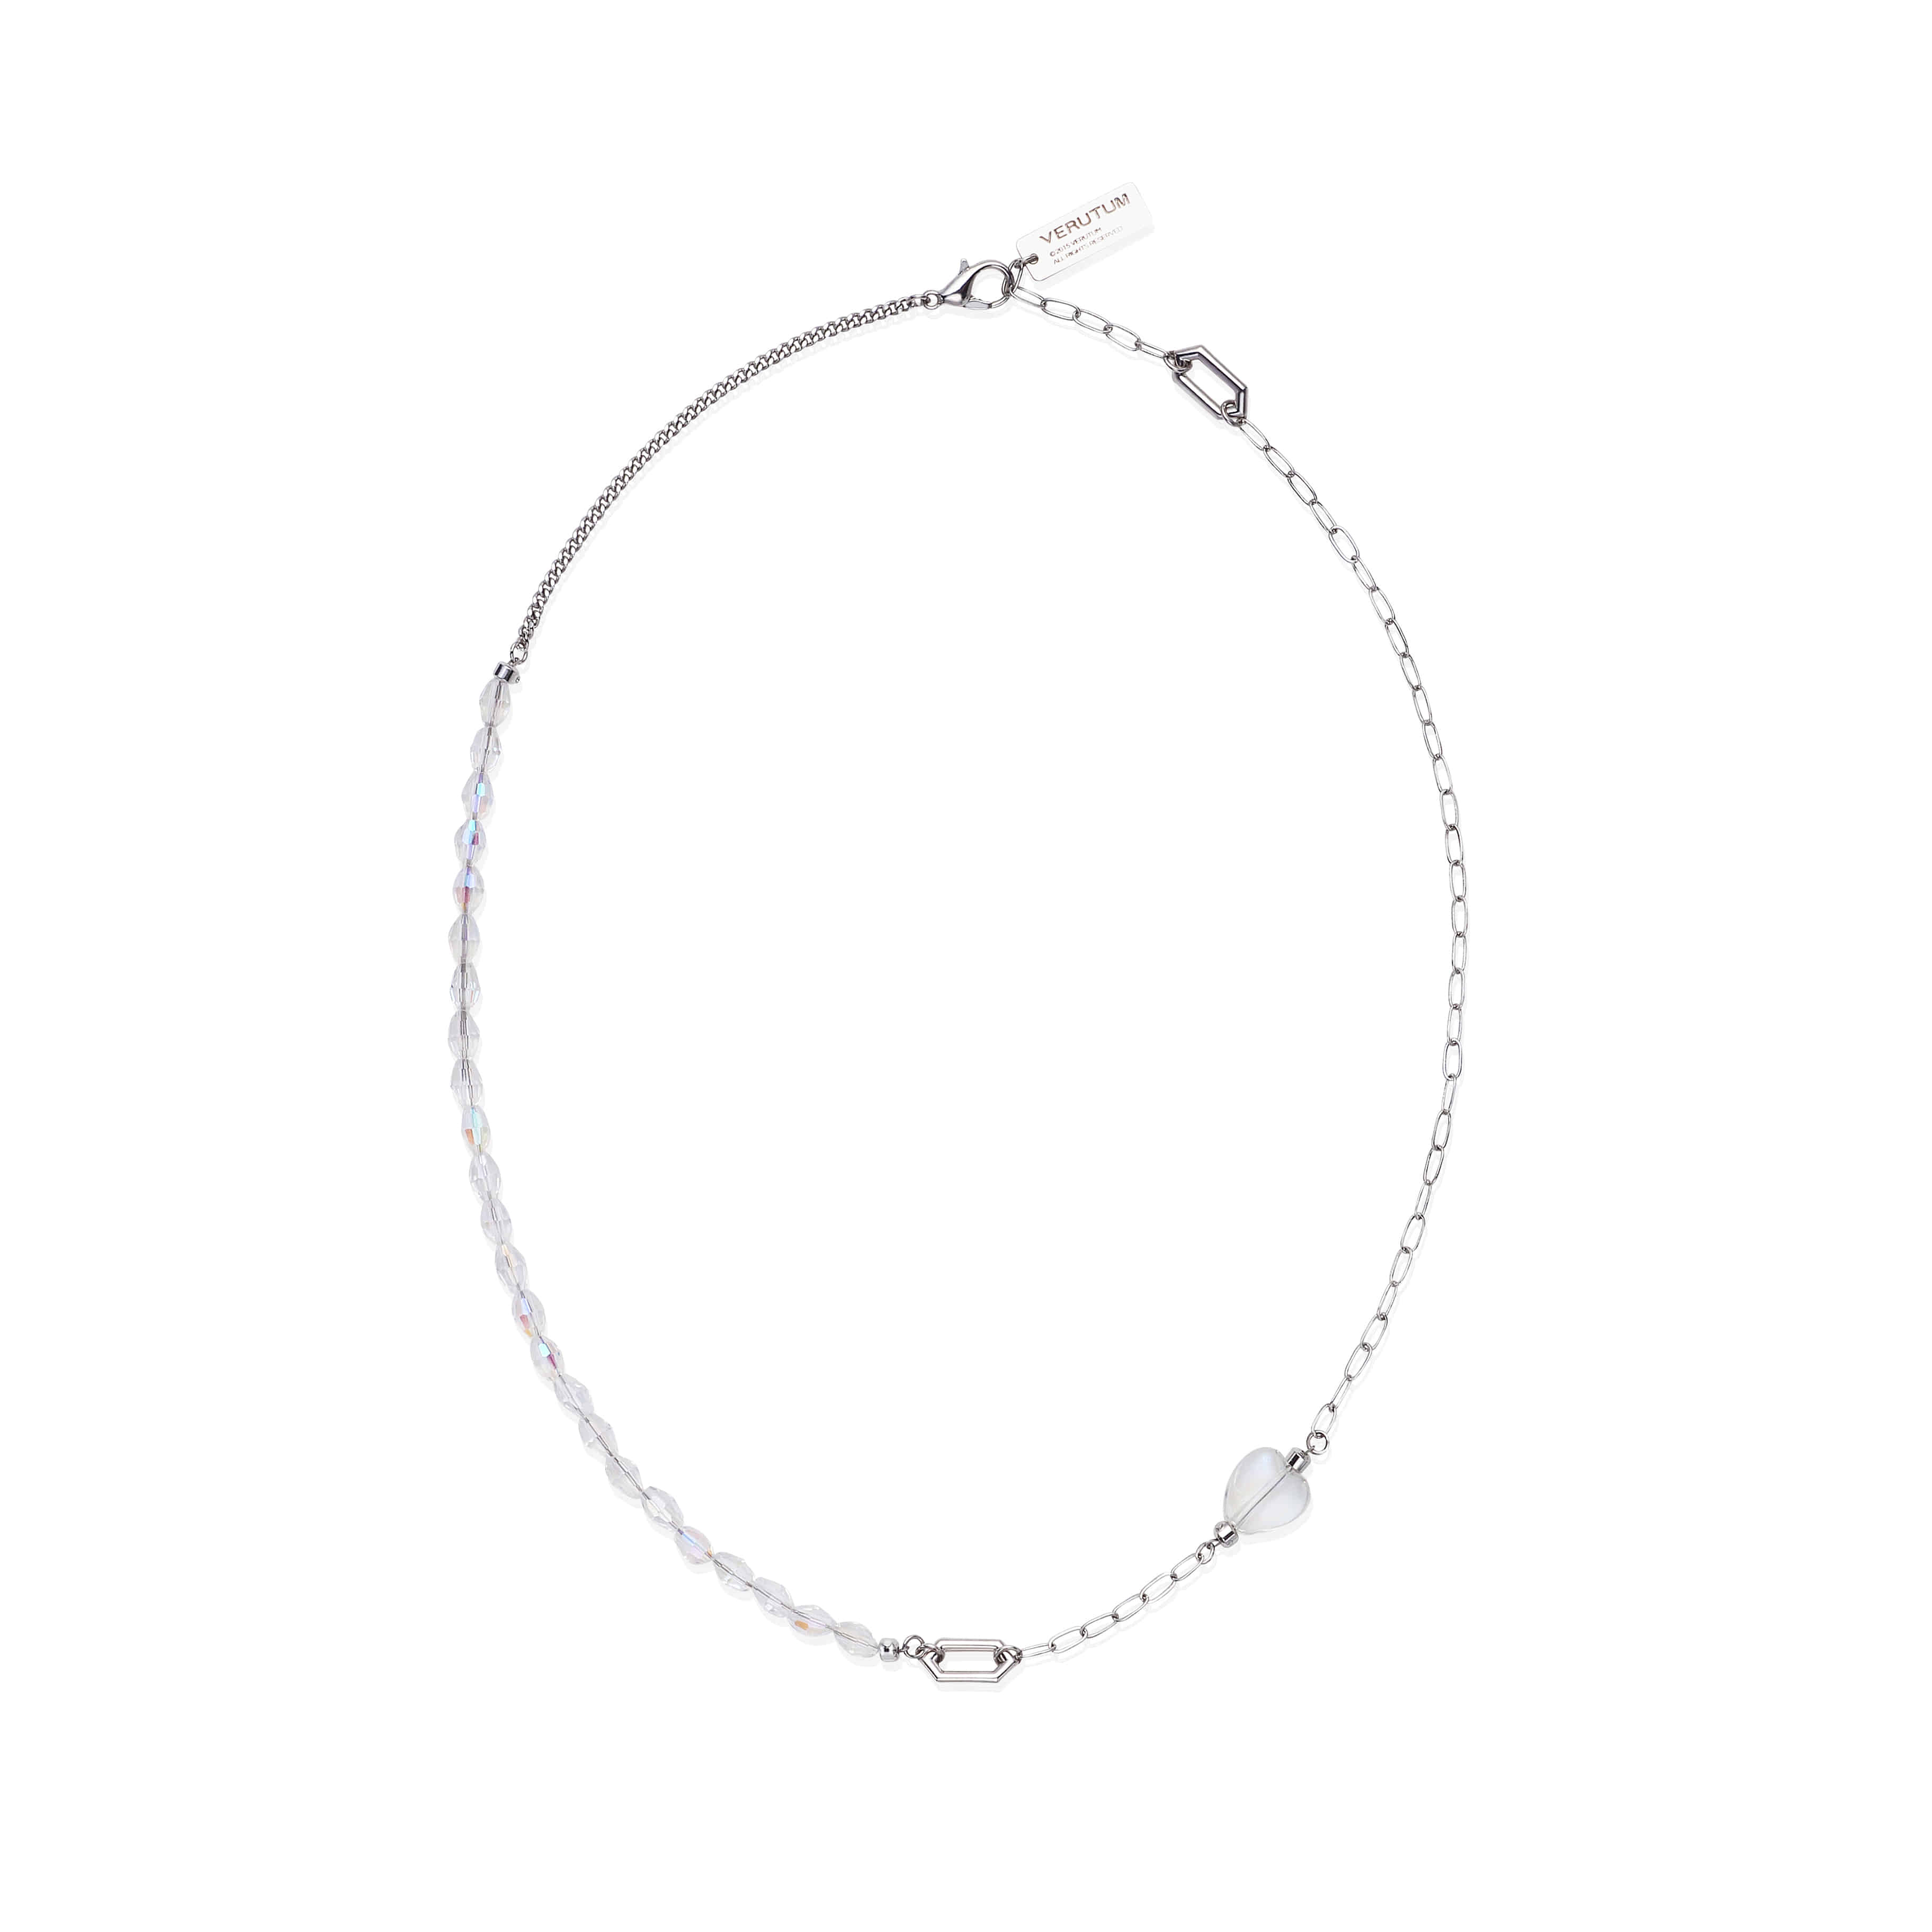 BRN018 : Multi Bead Chain Necklace